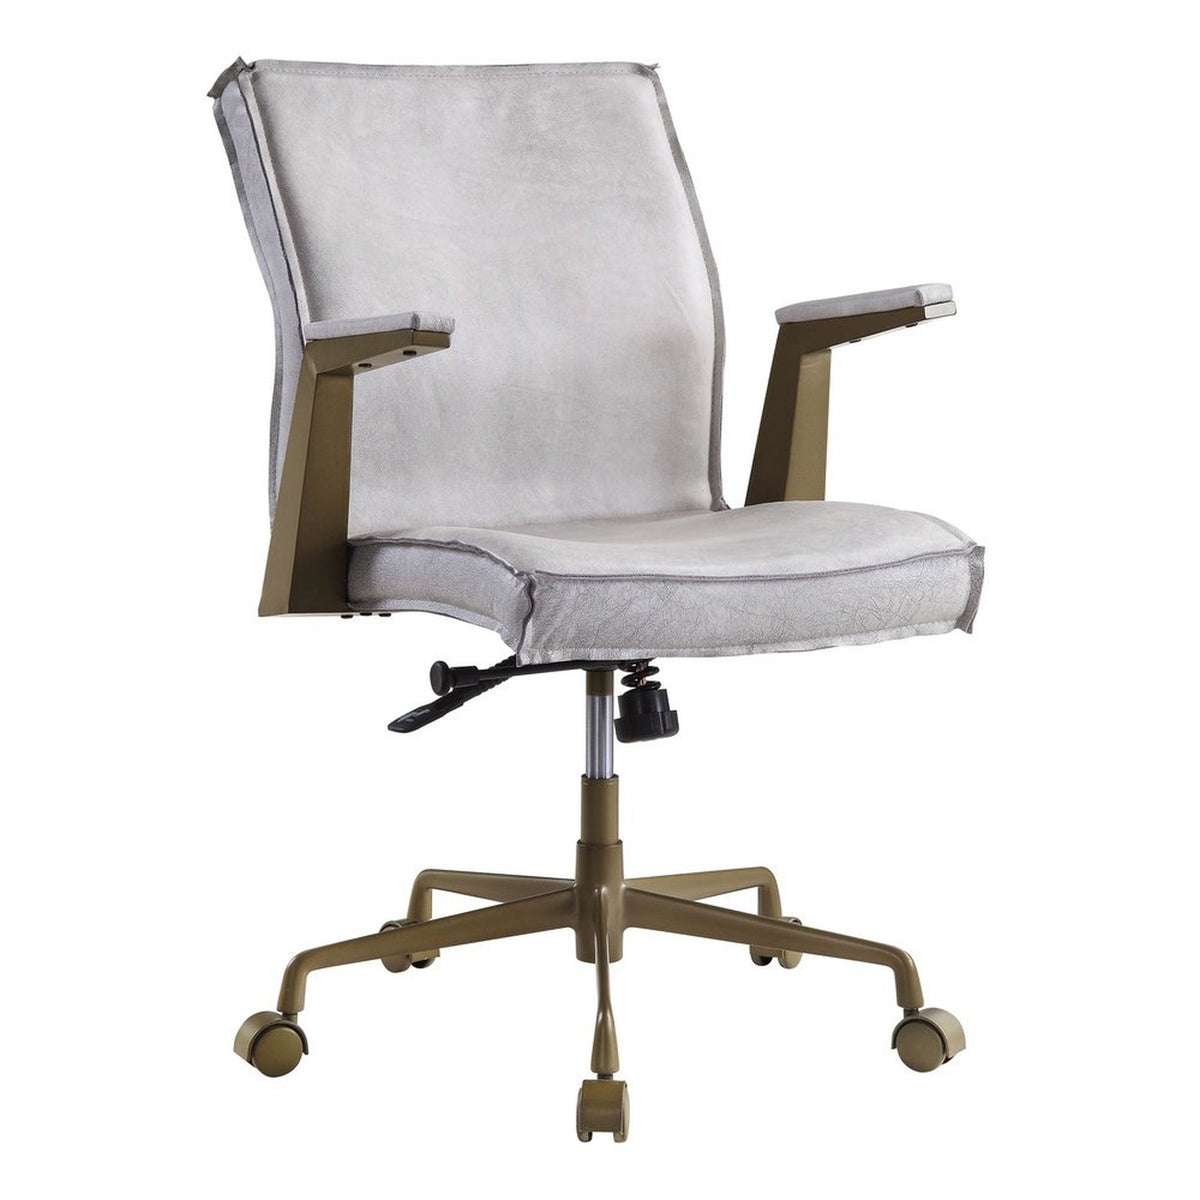 Attica Executive Office Chair - Light | Level Up Desks